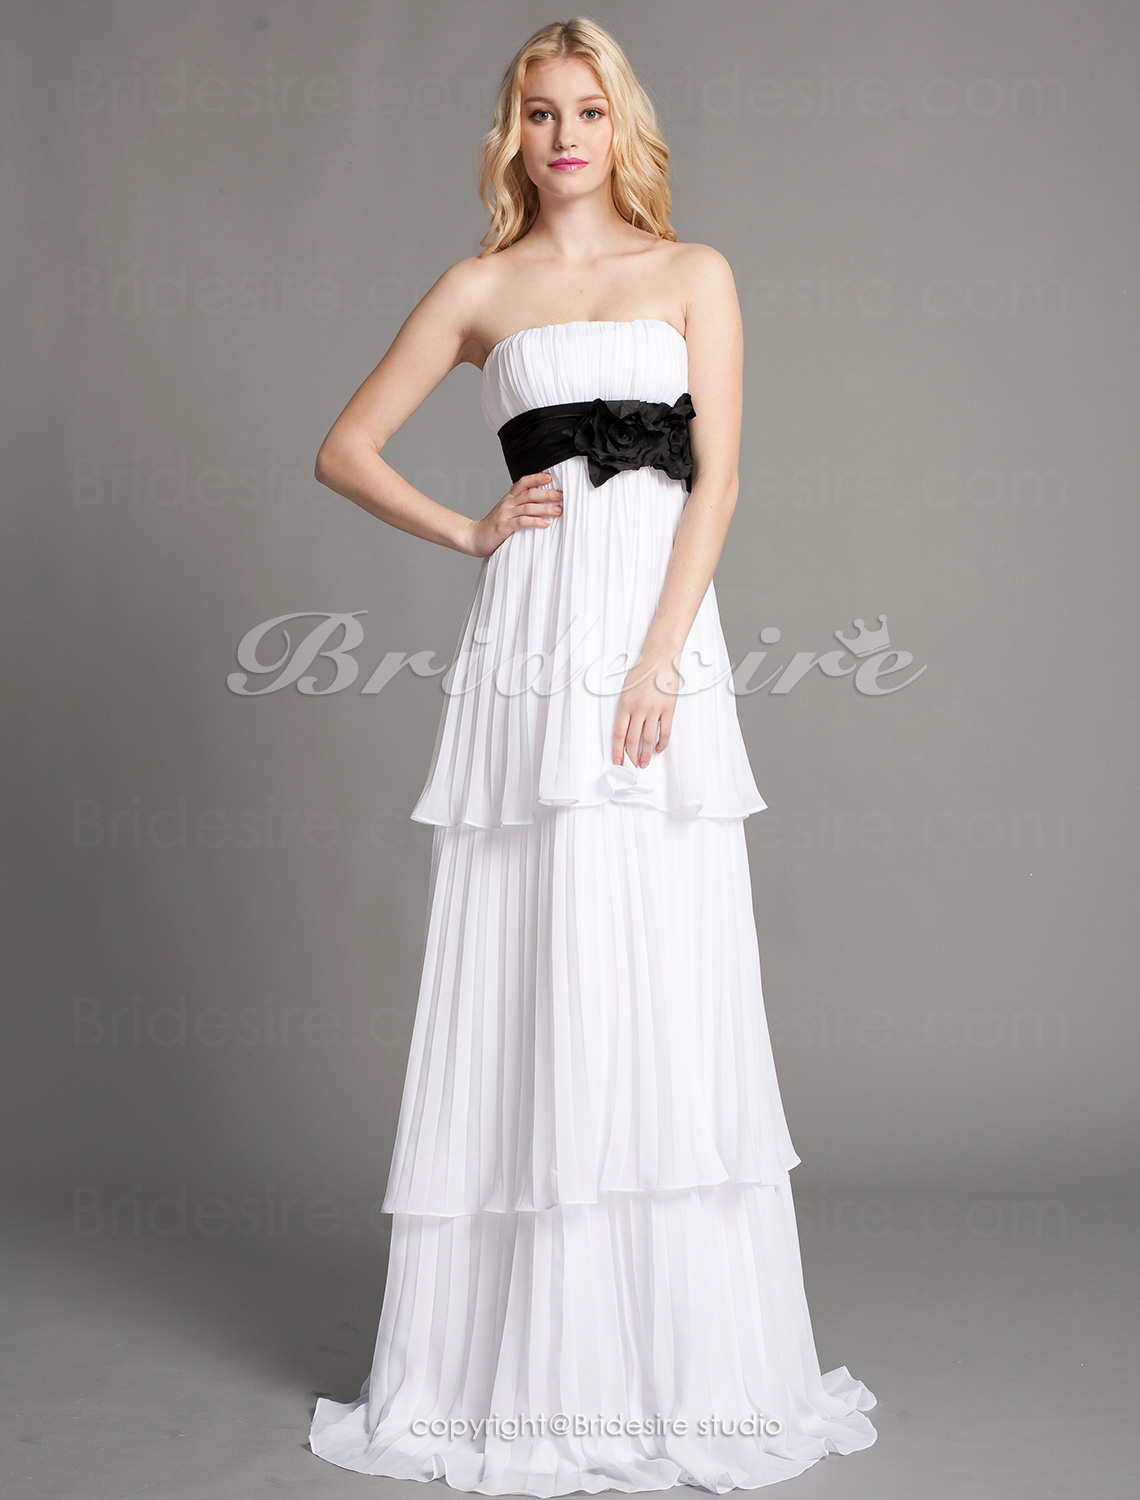 Sheath/Column Chiffon Floor-length Strapless Bridesmaid Dress